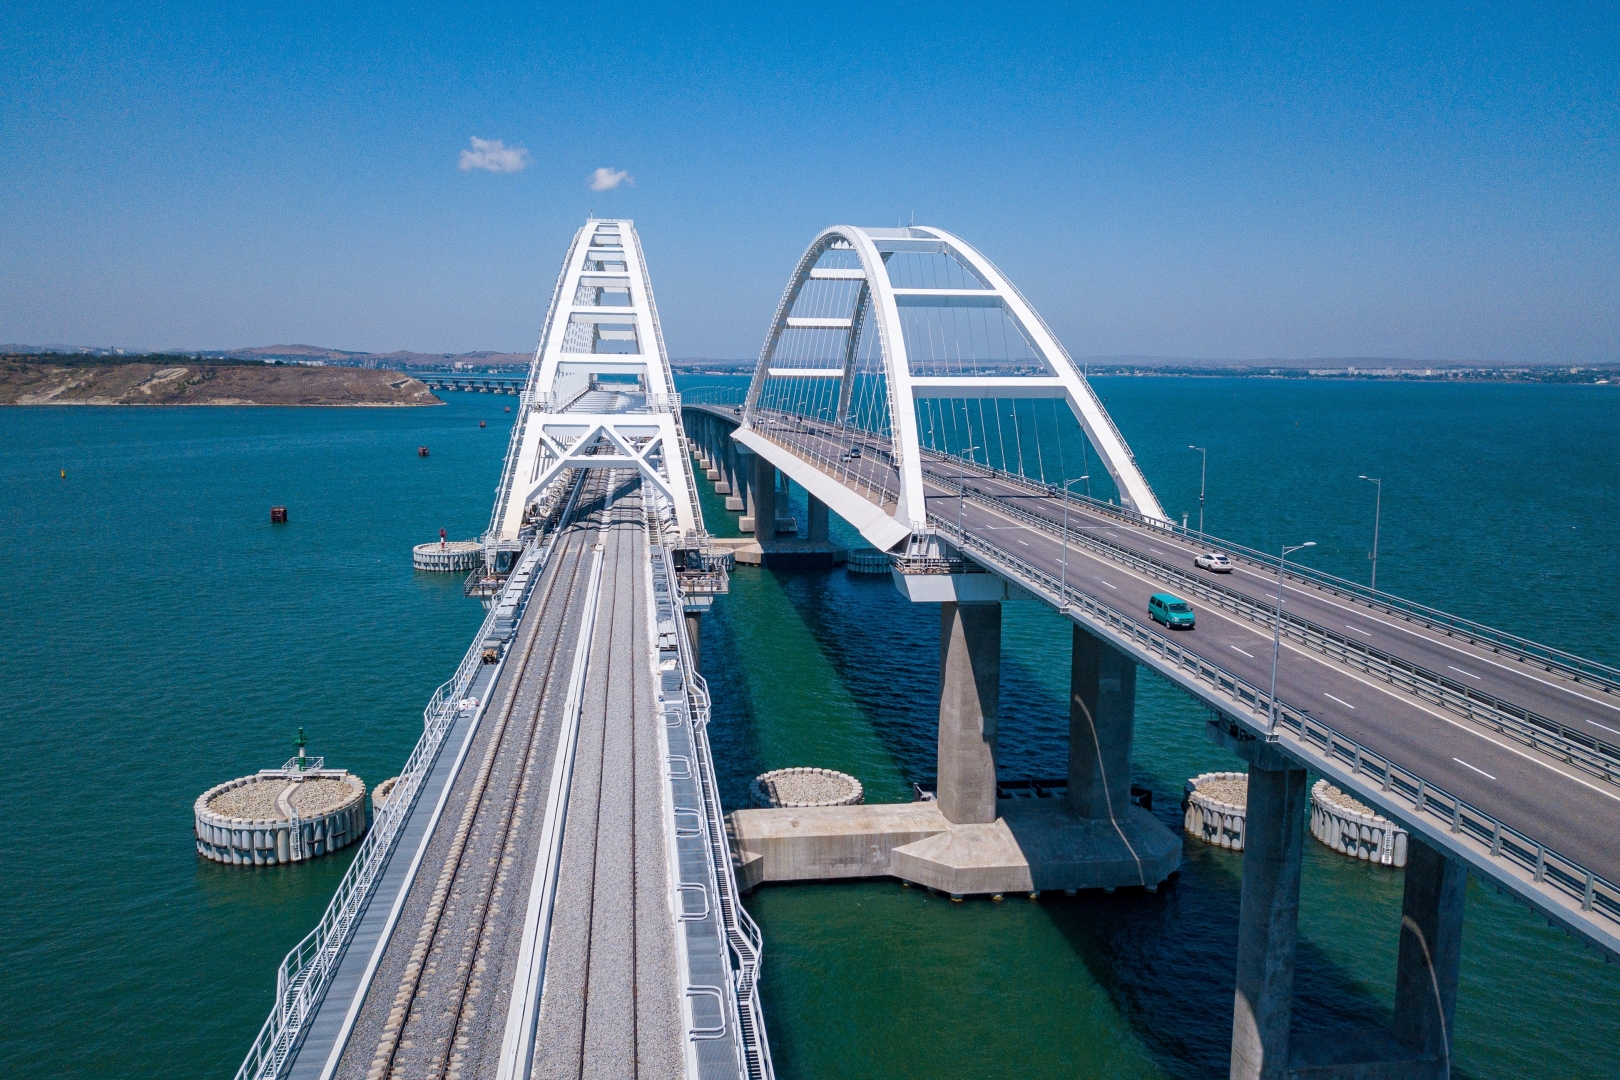 More information about "Η μακρύτερη γέφυρα της Ευρώπης μήκους 19 χλμ. στην Κριμαία"